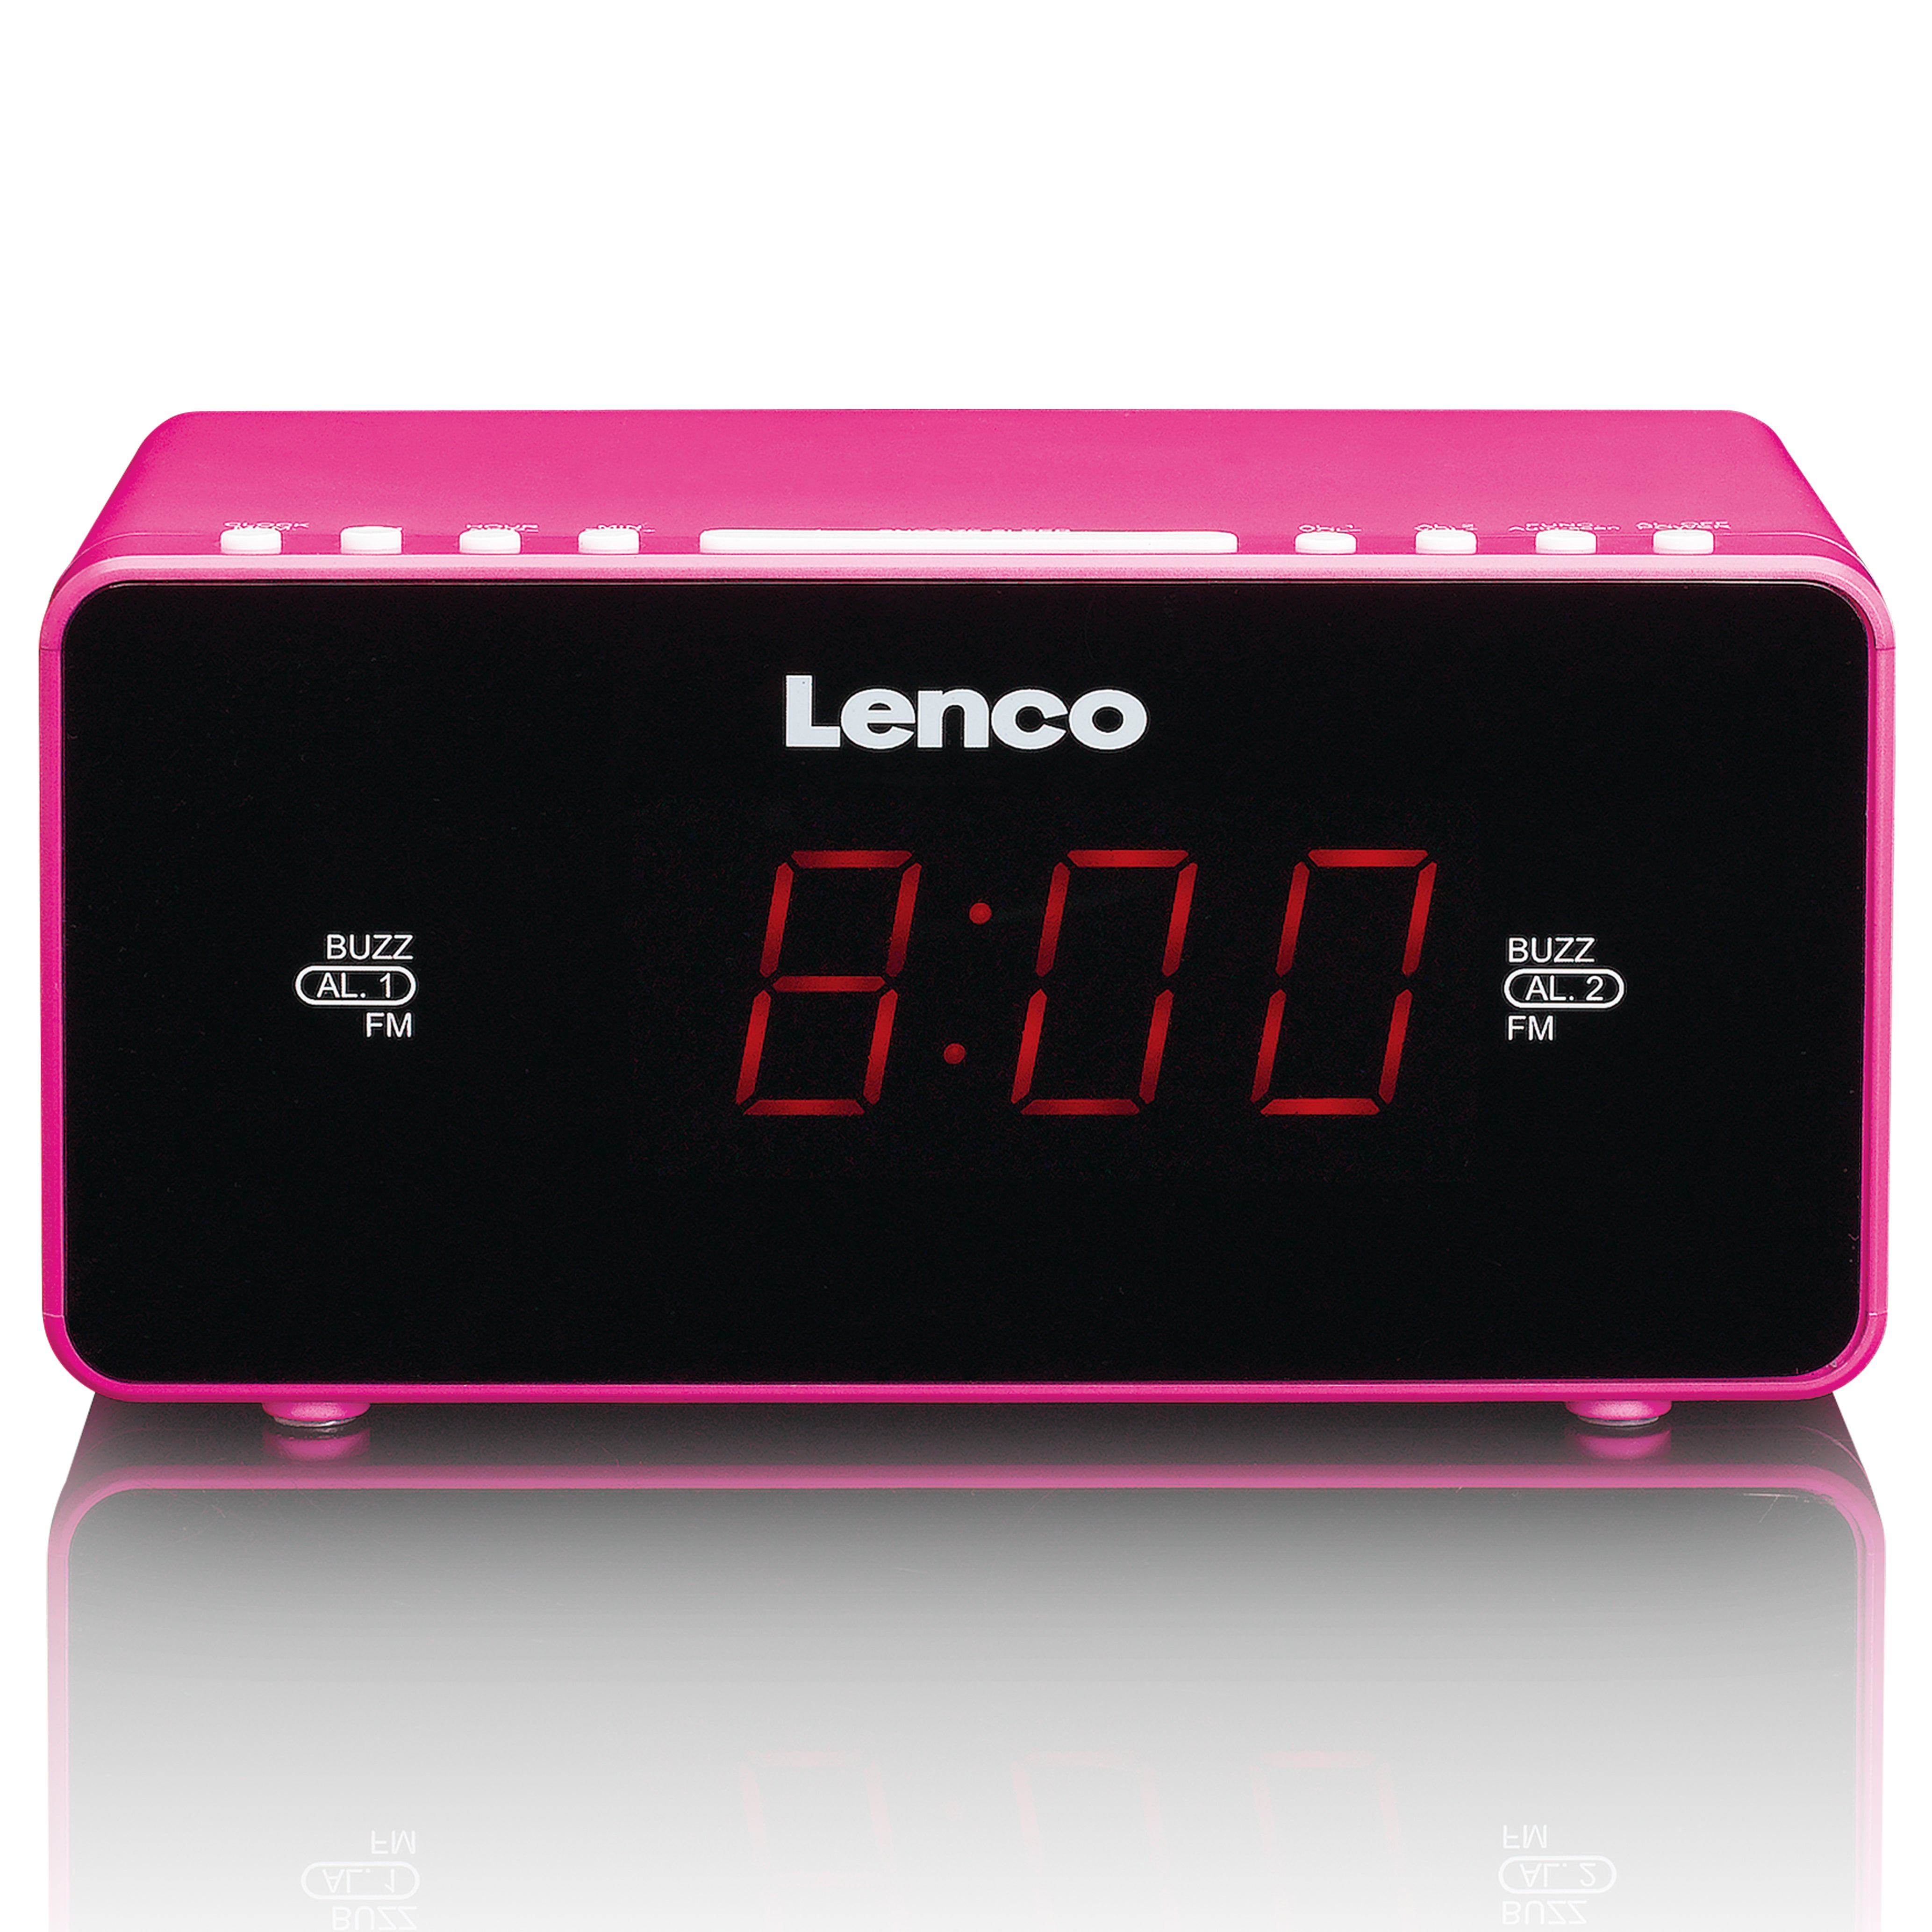 offiziellen Webshop | im – Lenco CR-510PK Lenco.de Offizieller - Lenco Webshop kaufen? Jetzt